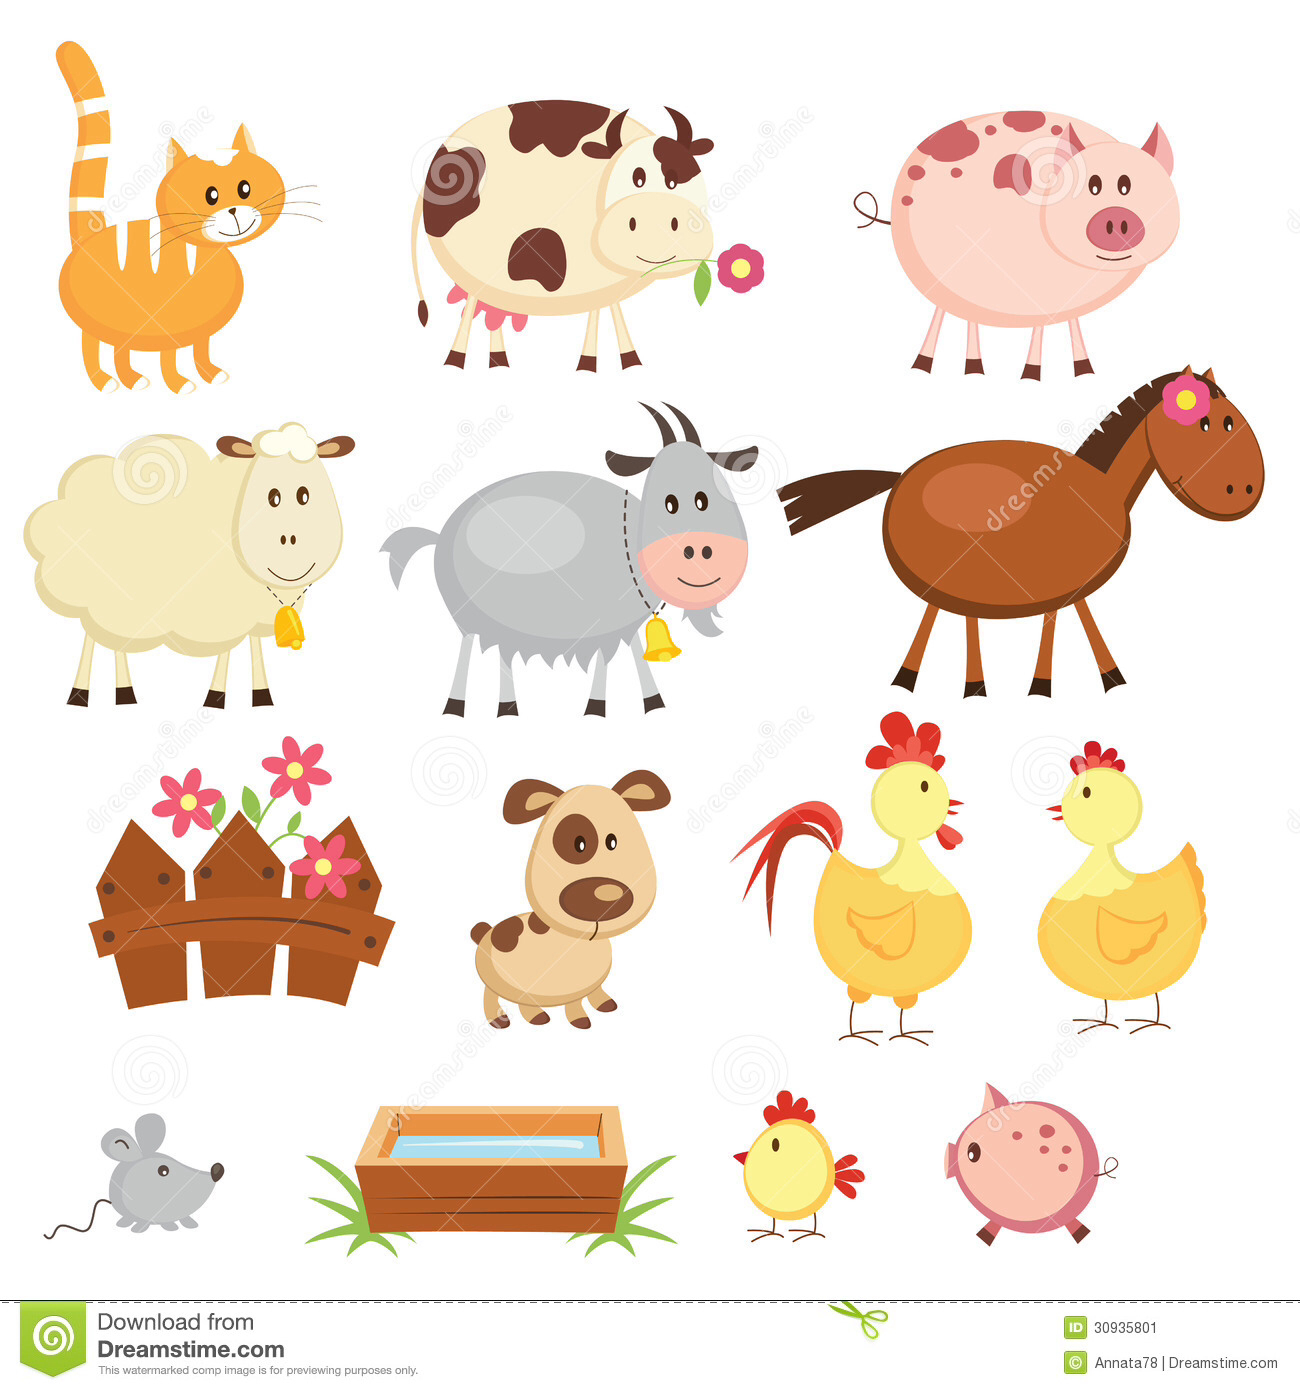 Animals clip art | Download .